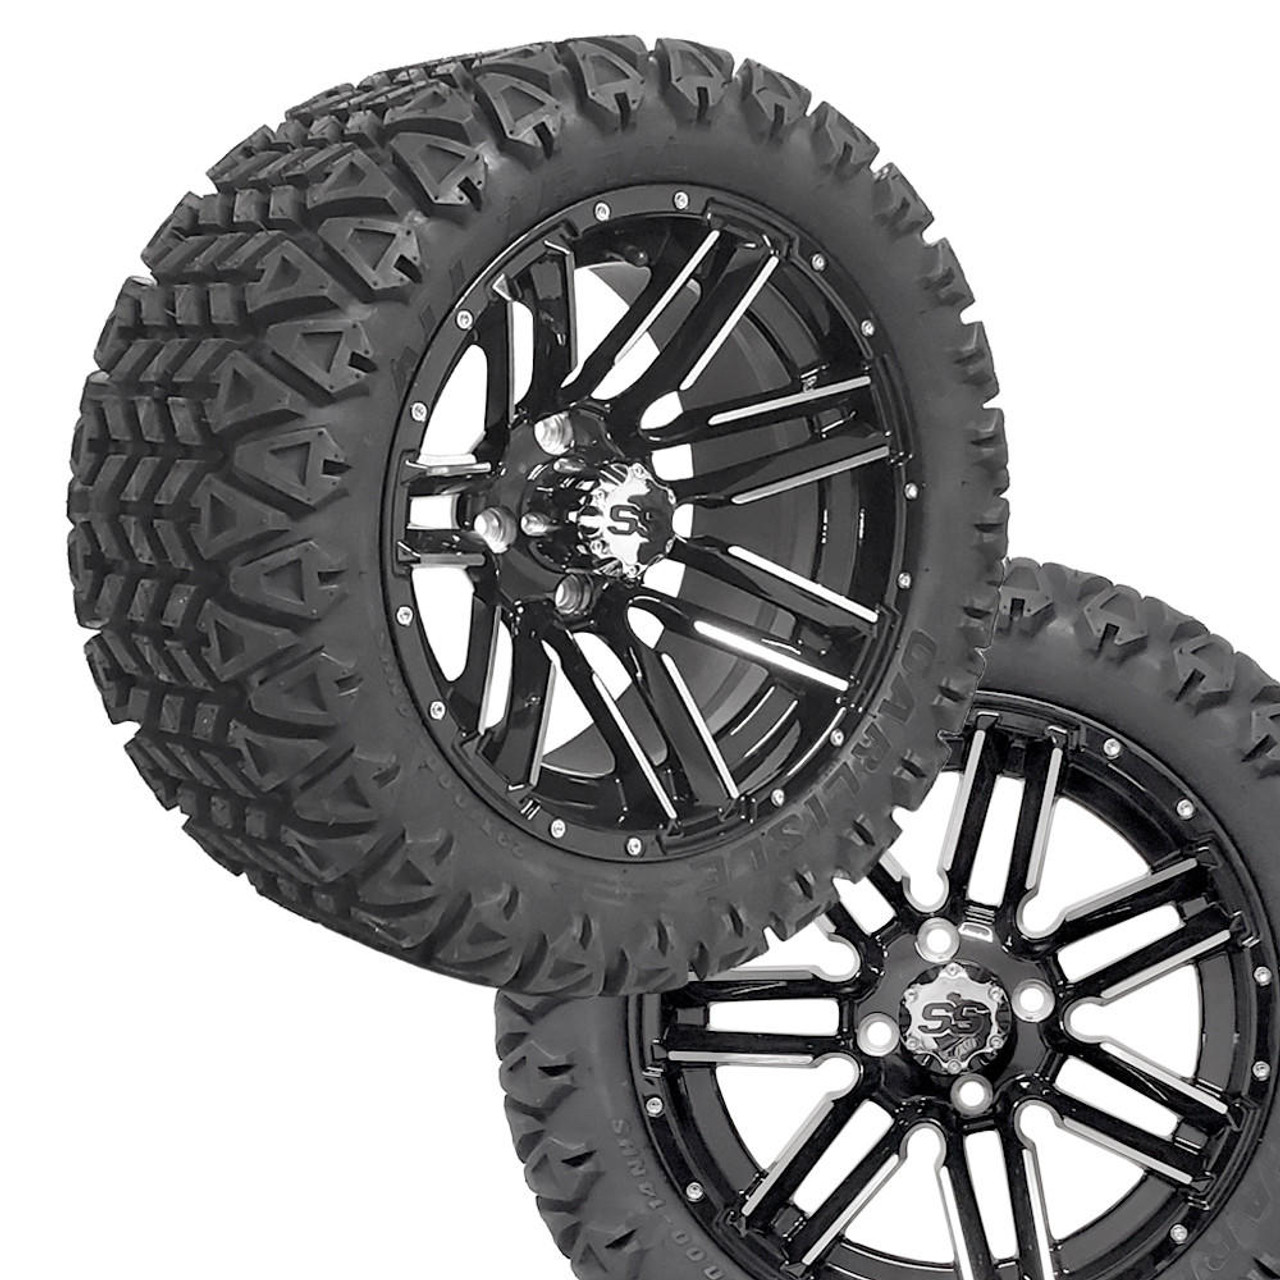 ProFormX 14" SLEDGE Machined/Black Wheels on 23x10x14 Predator A/T Tires (Set of 4) 